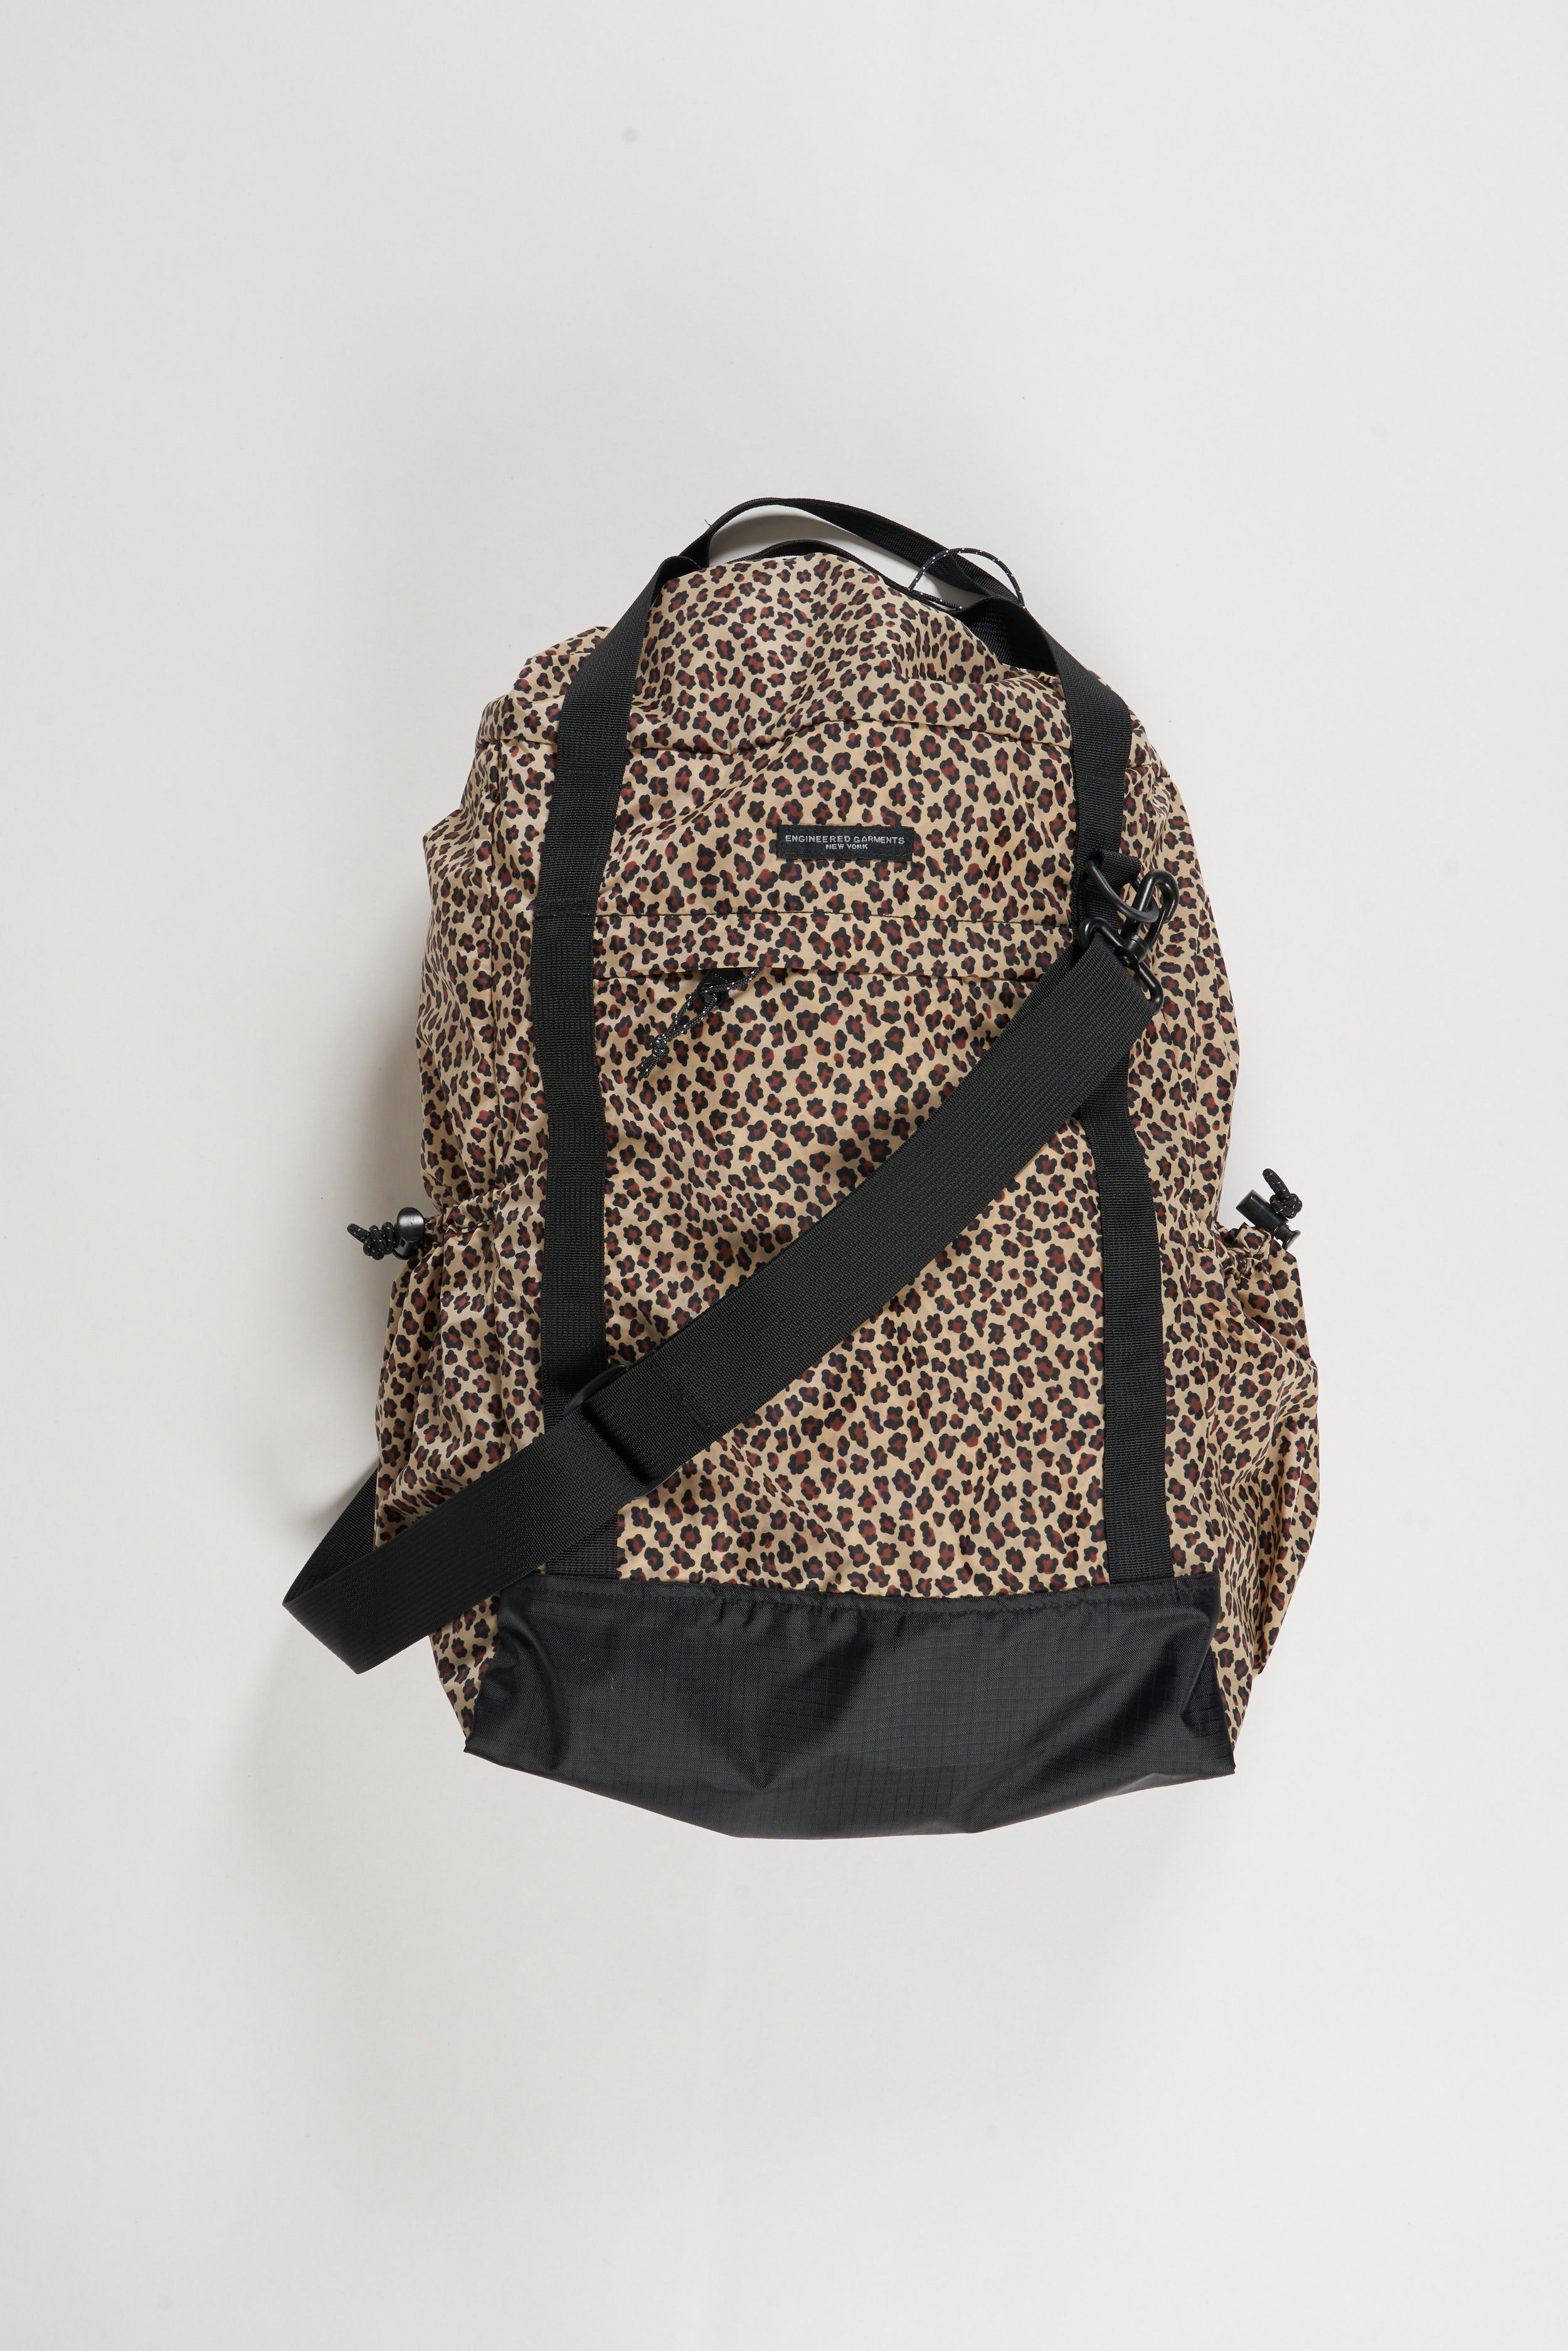 UL 3 Way Bag - Khaki Nylon Leopard Print